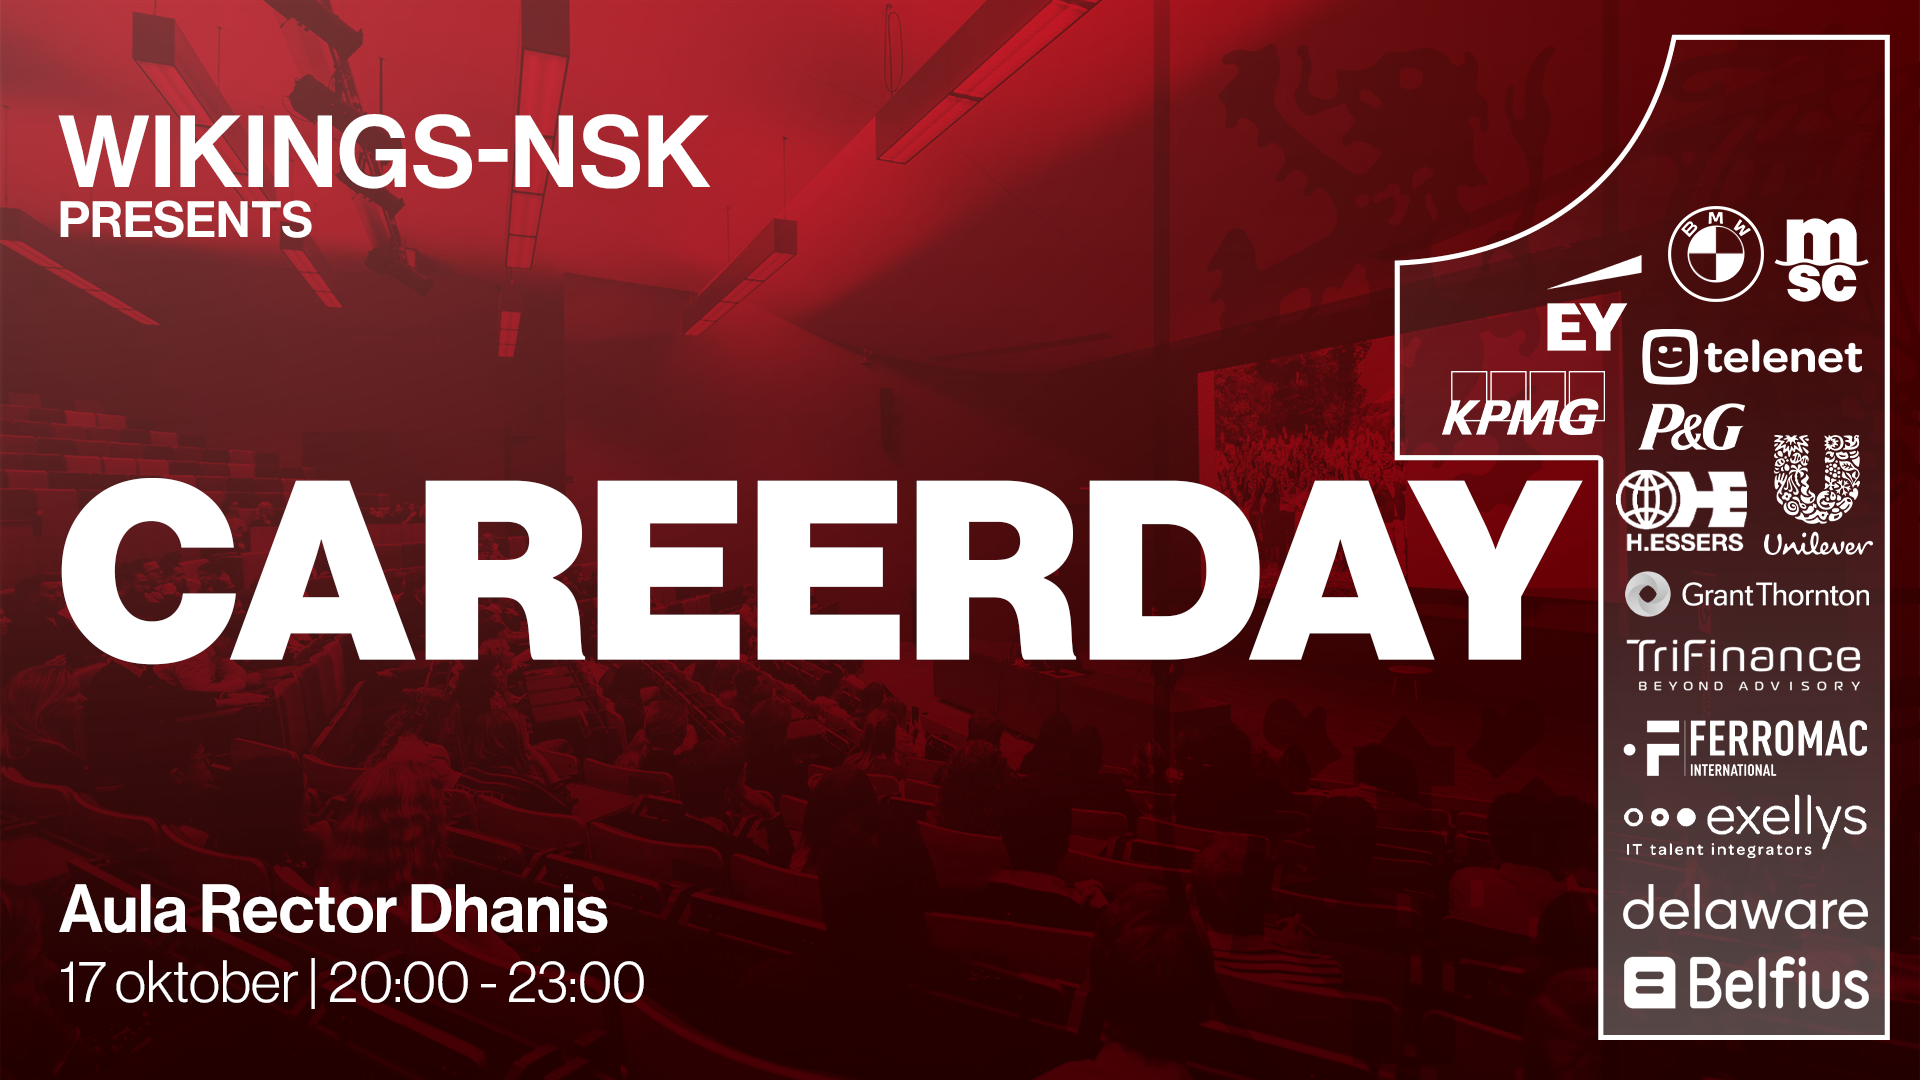 wikings-nsk-careerday-1-1